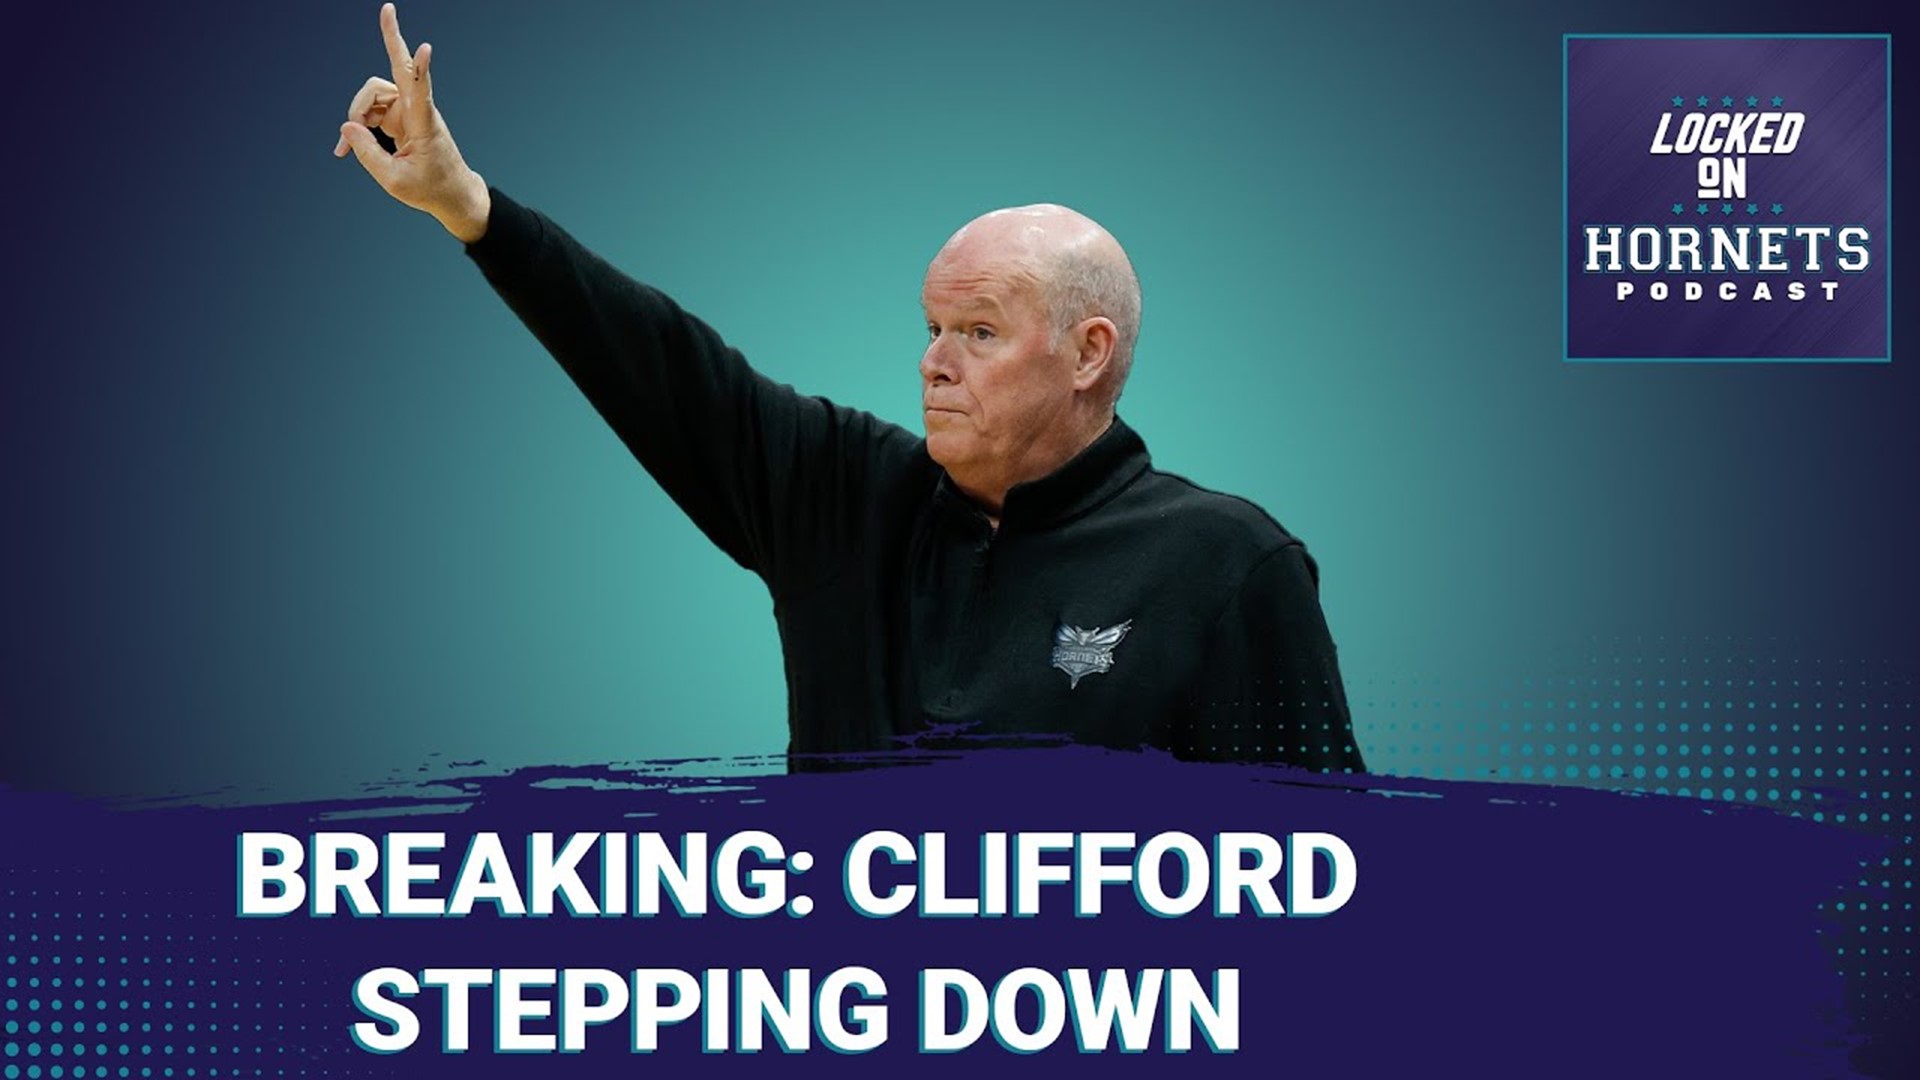 BREAKING: Charlotte Hornets head coach Steve Clifford stepping down at season's end